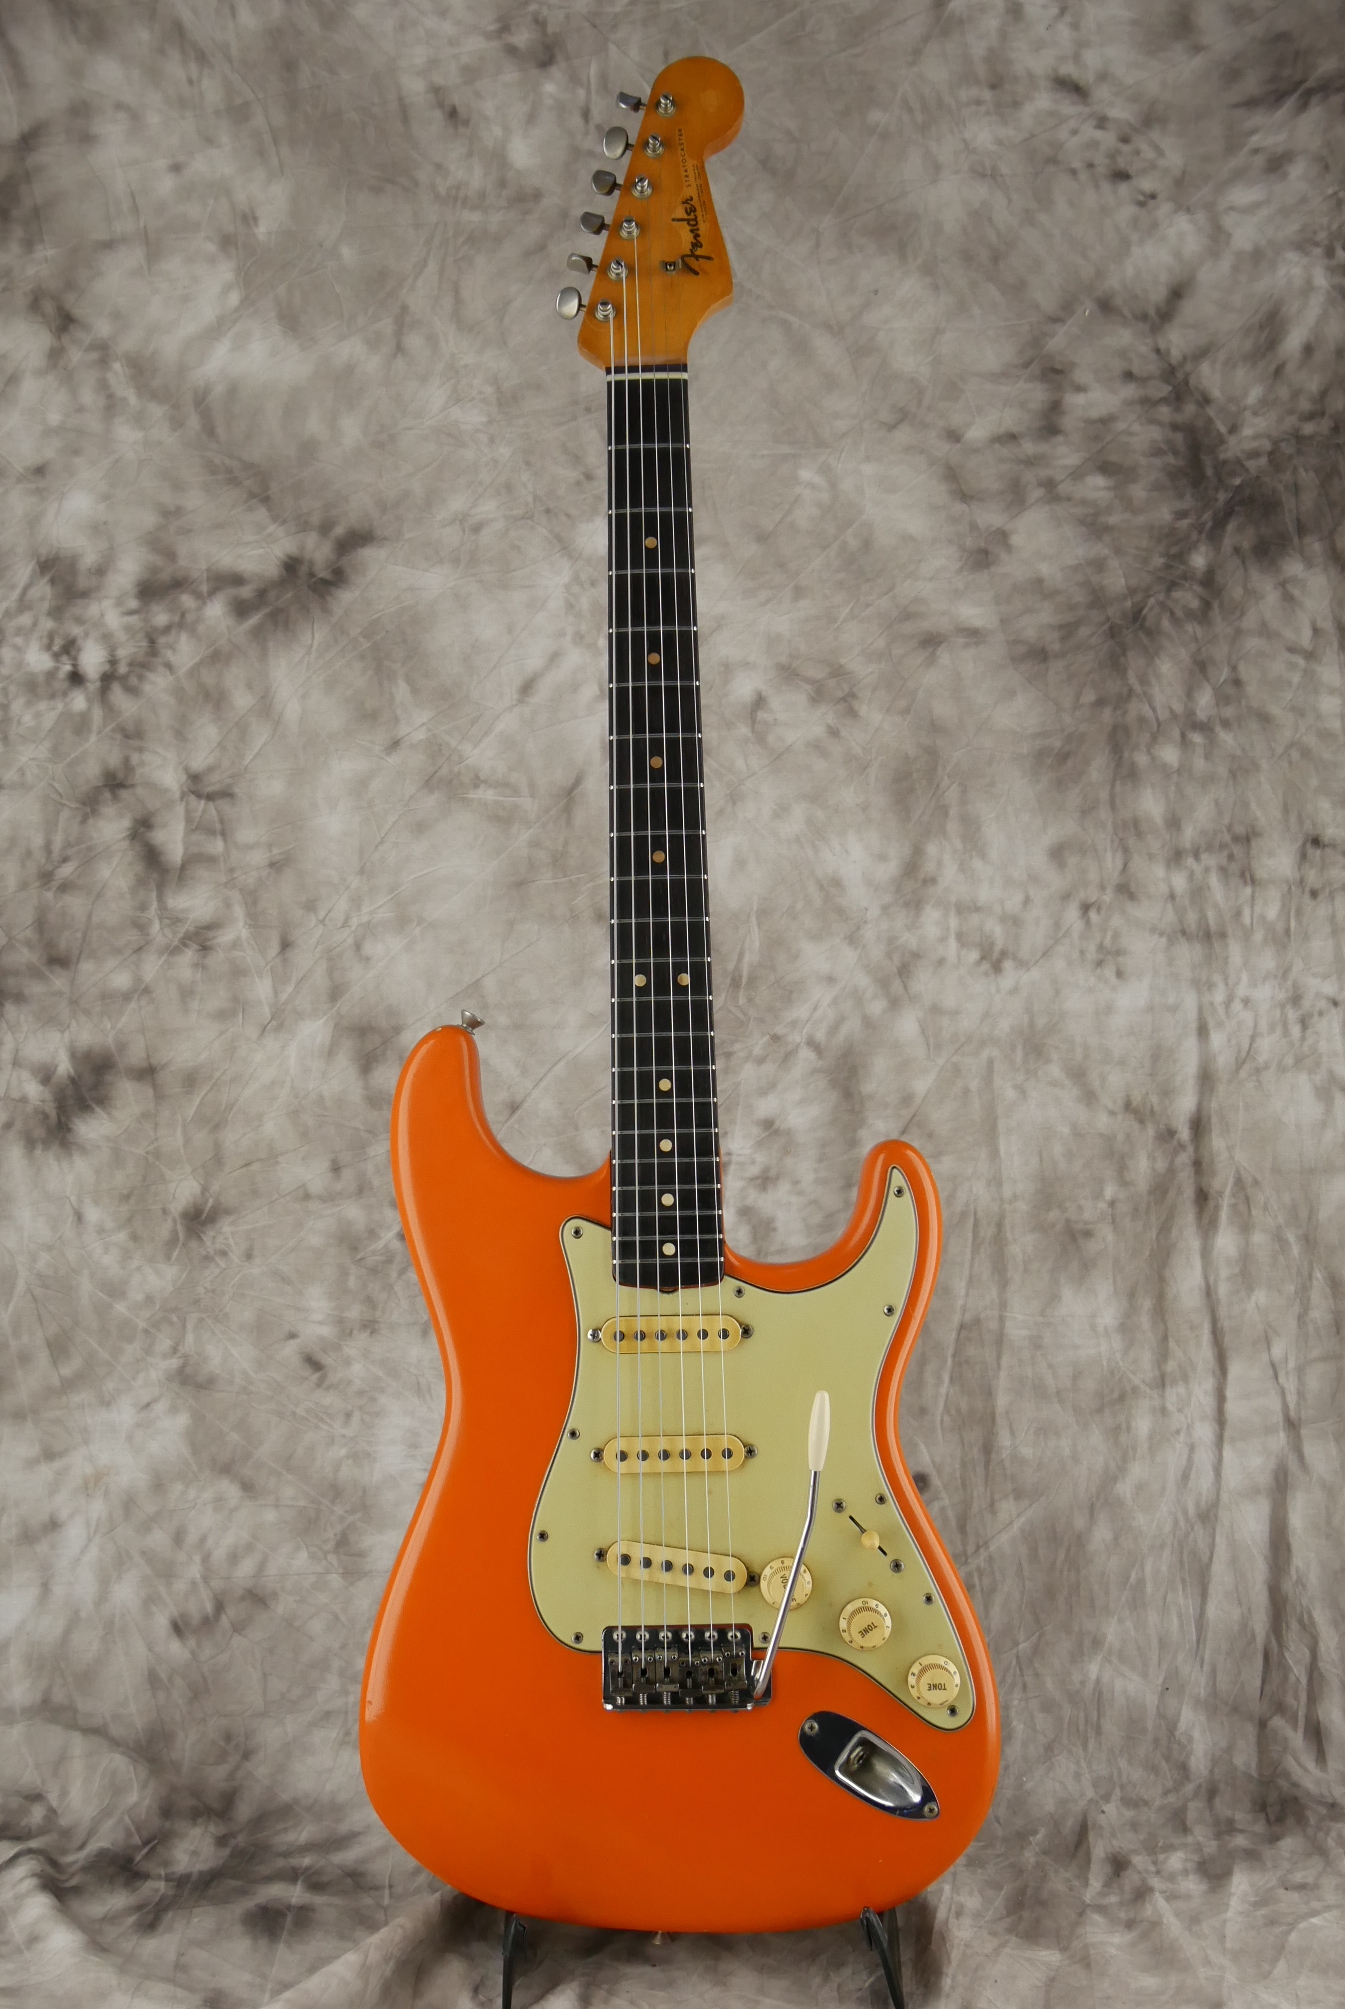 Fender-Stratocaster-1964-orange-refinish